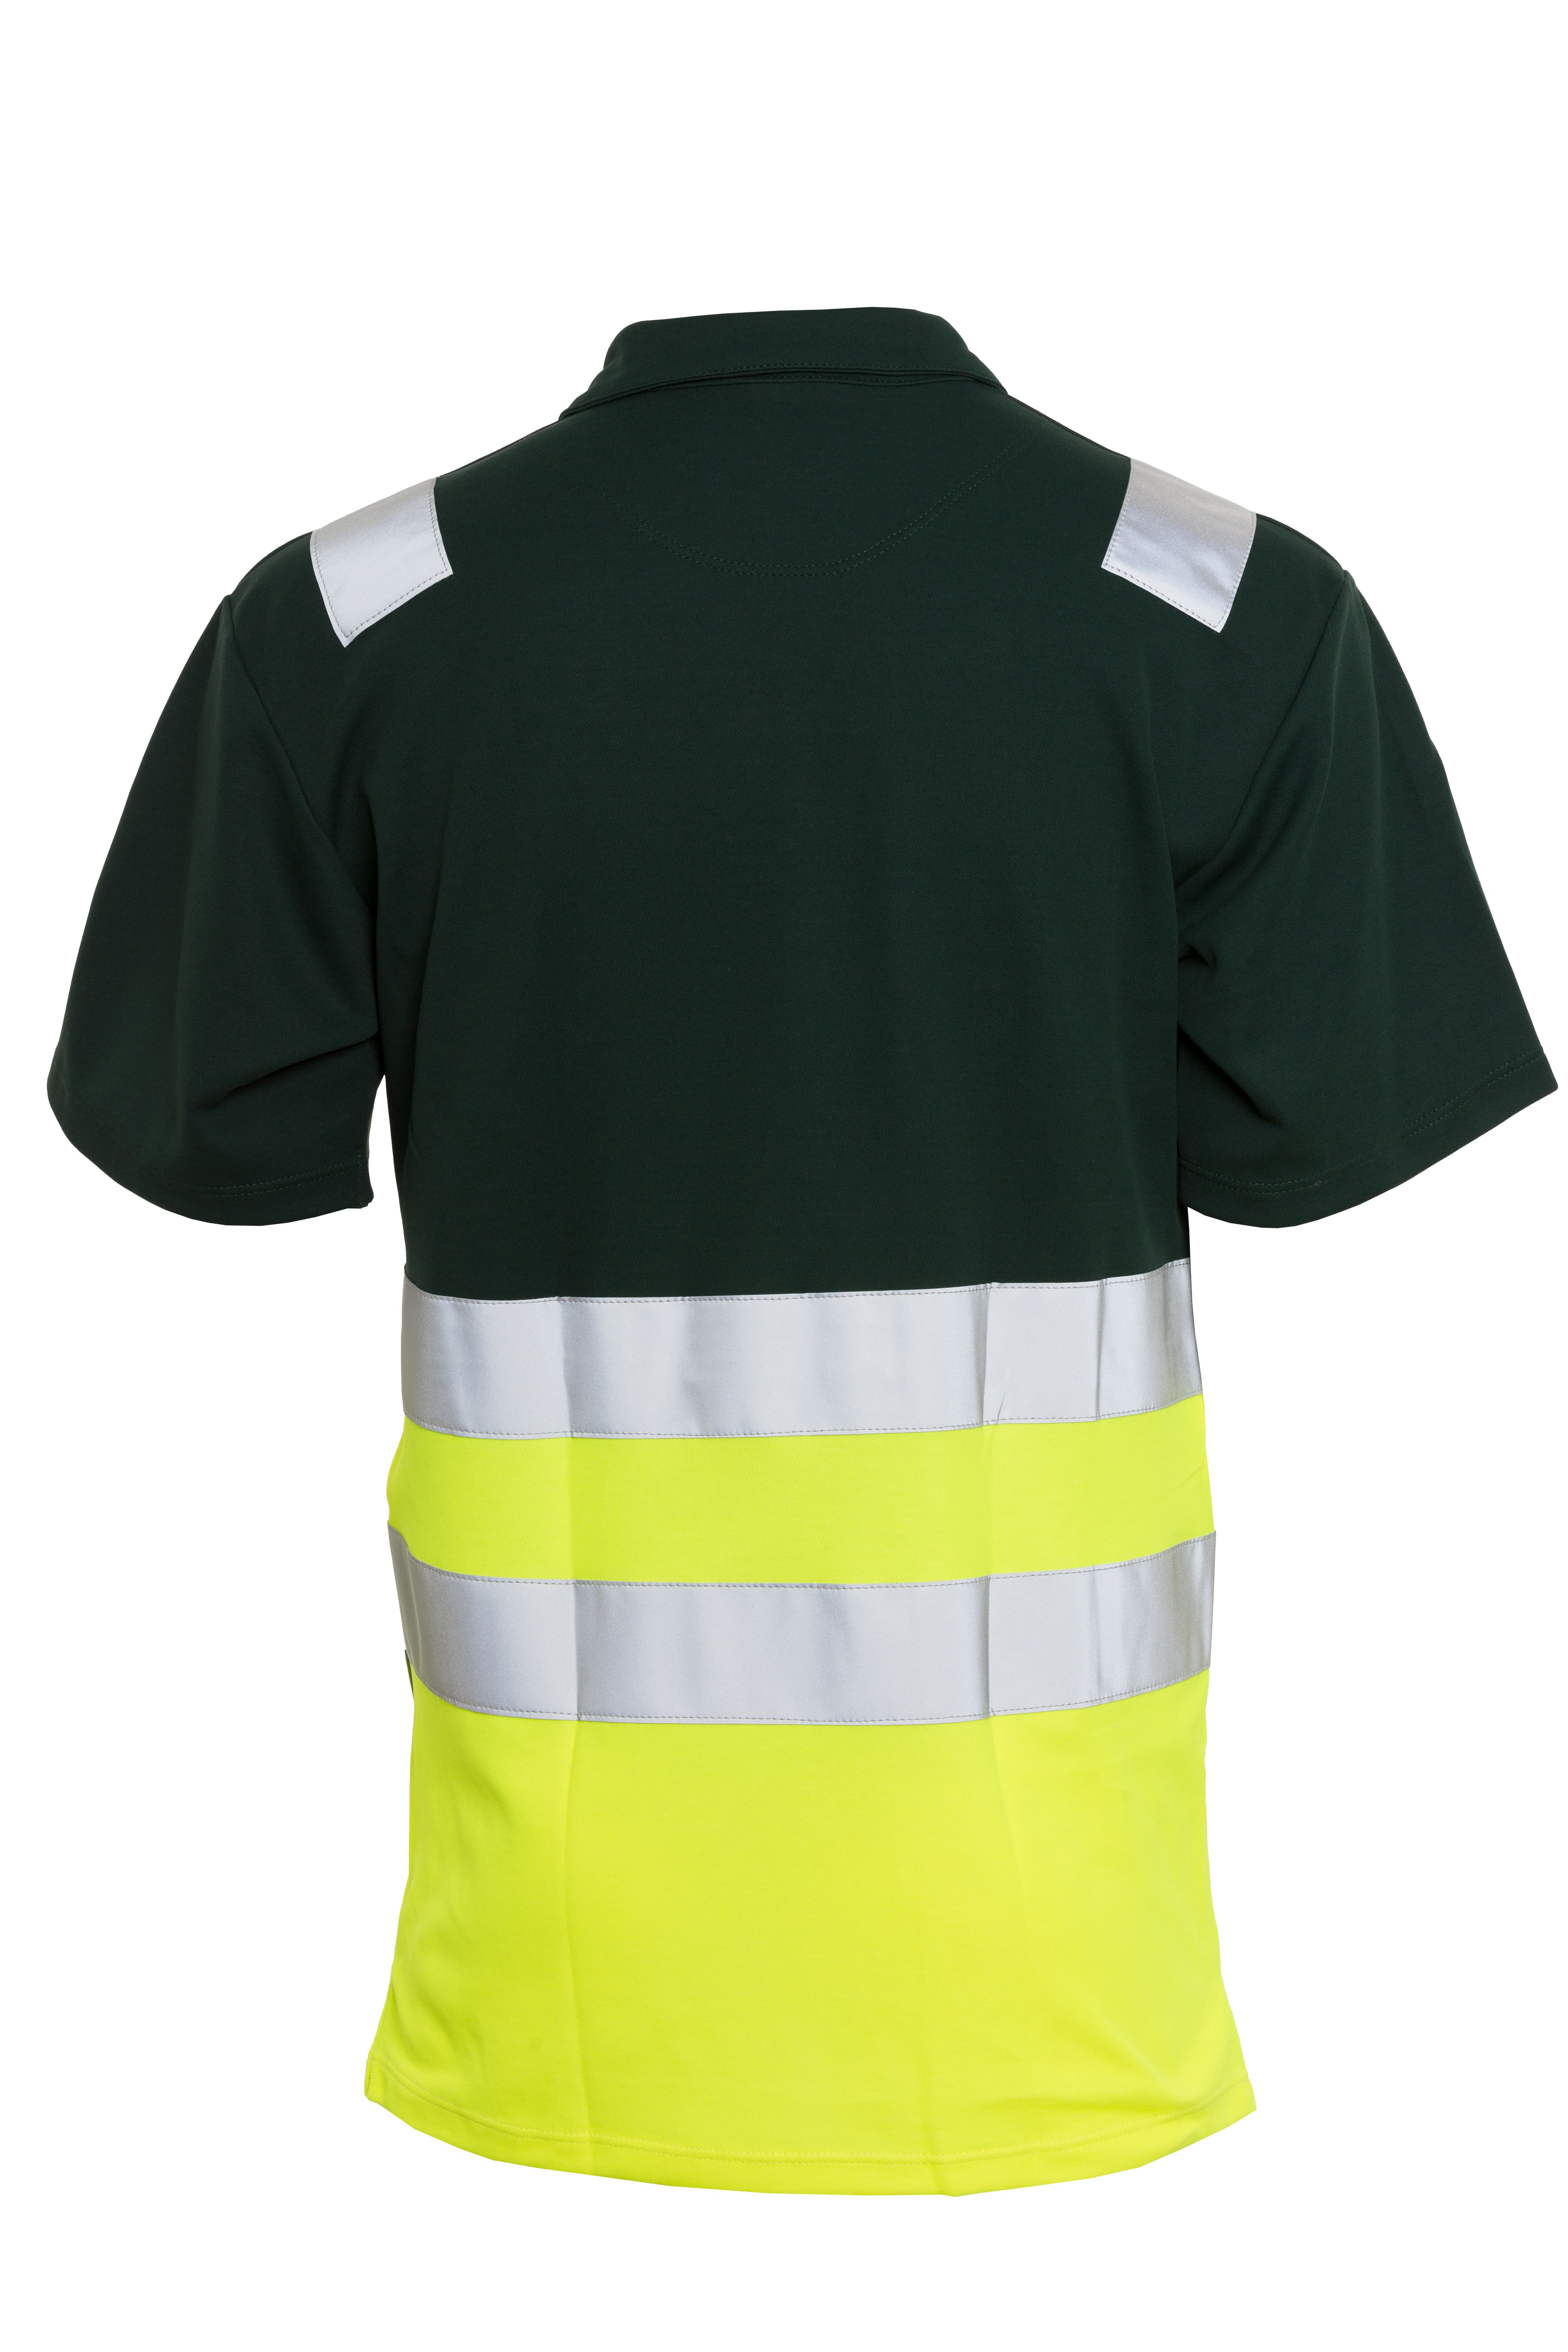 Rescuewear Poloshirt kurze Ärmel HiVis Klasse 1 Neon Gelb / Grün - L